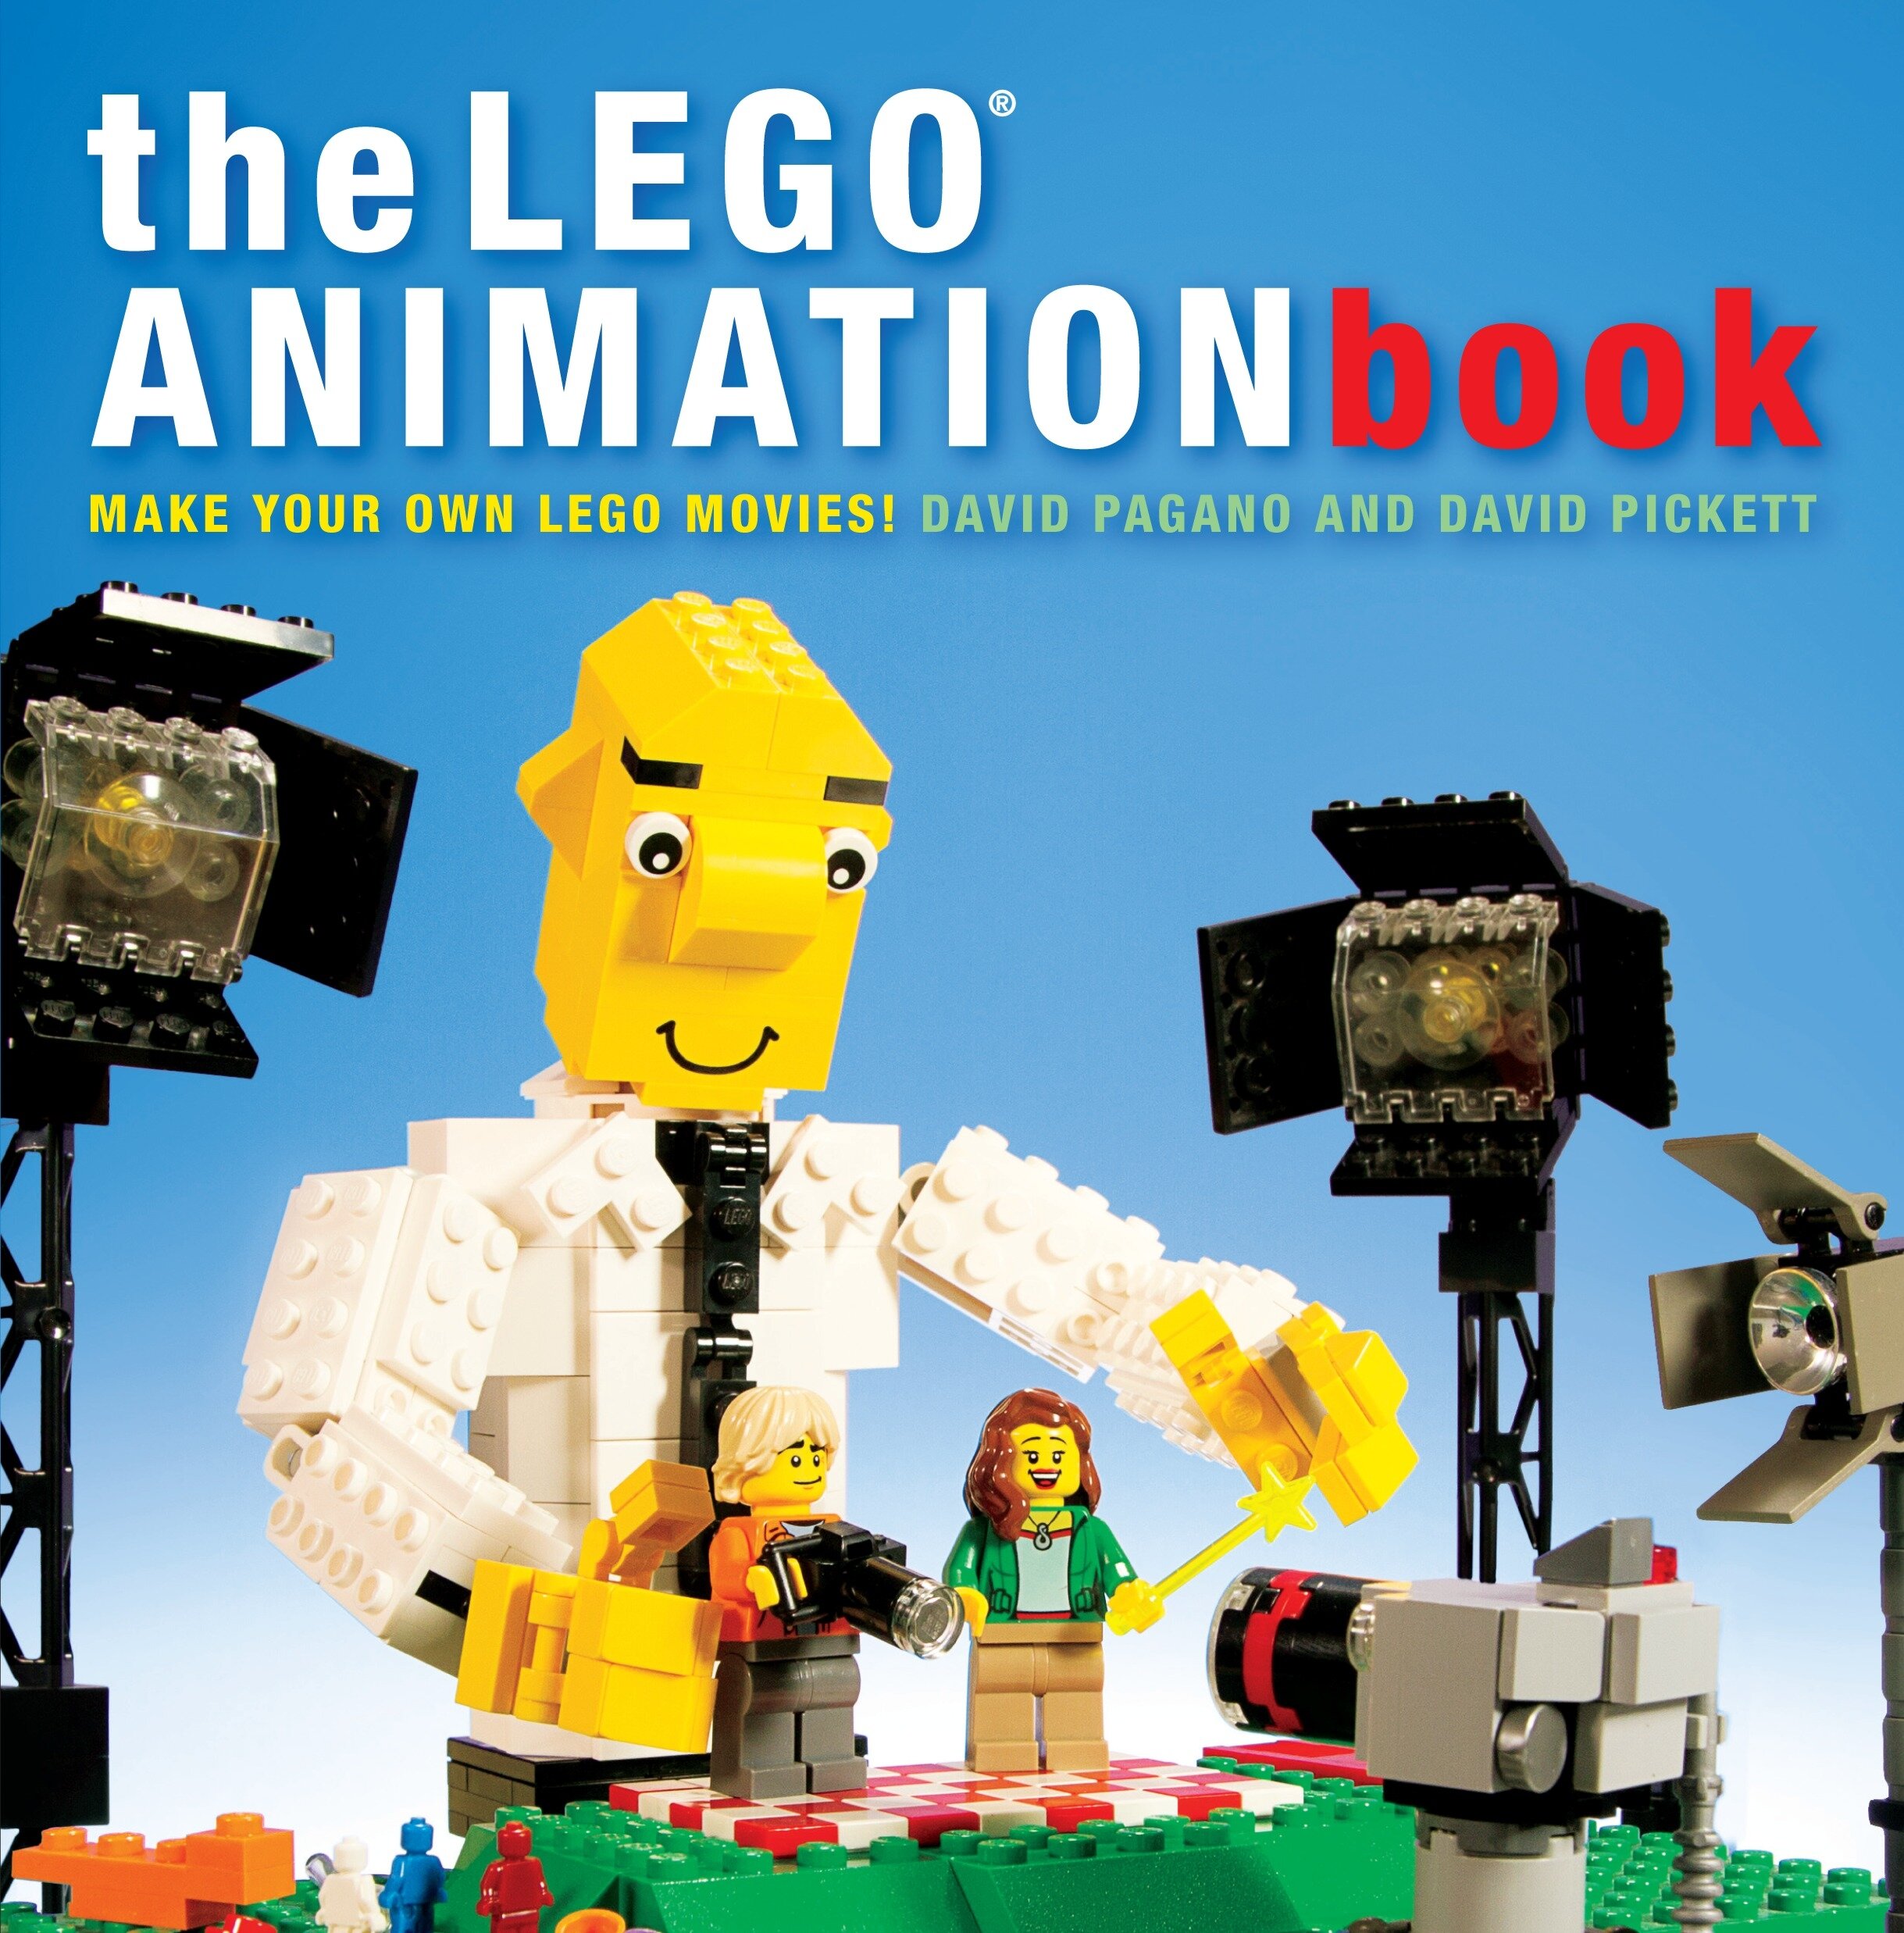 LegoAnimationbook1.jpg